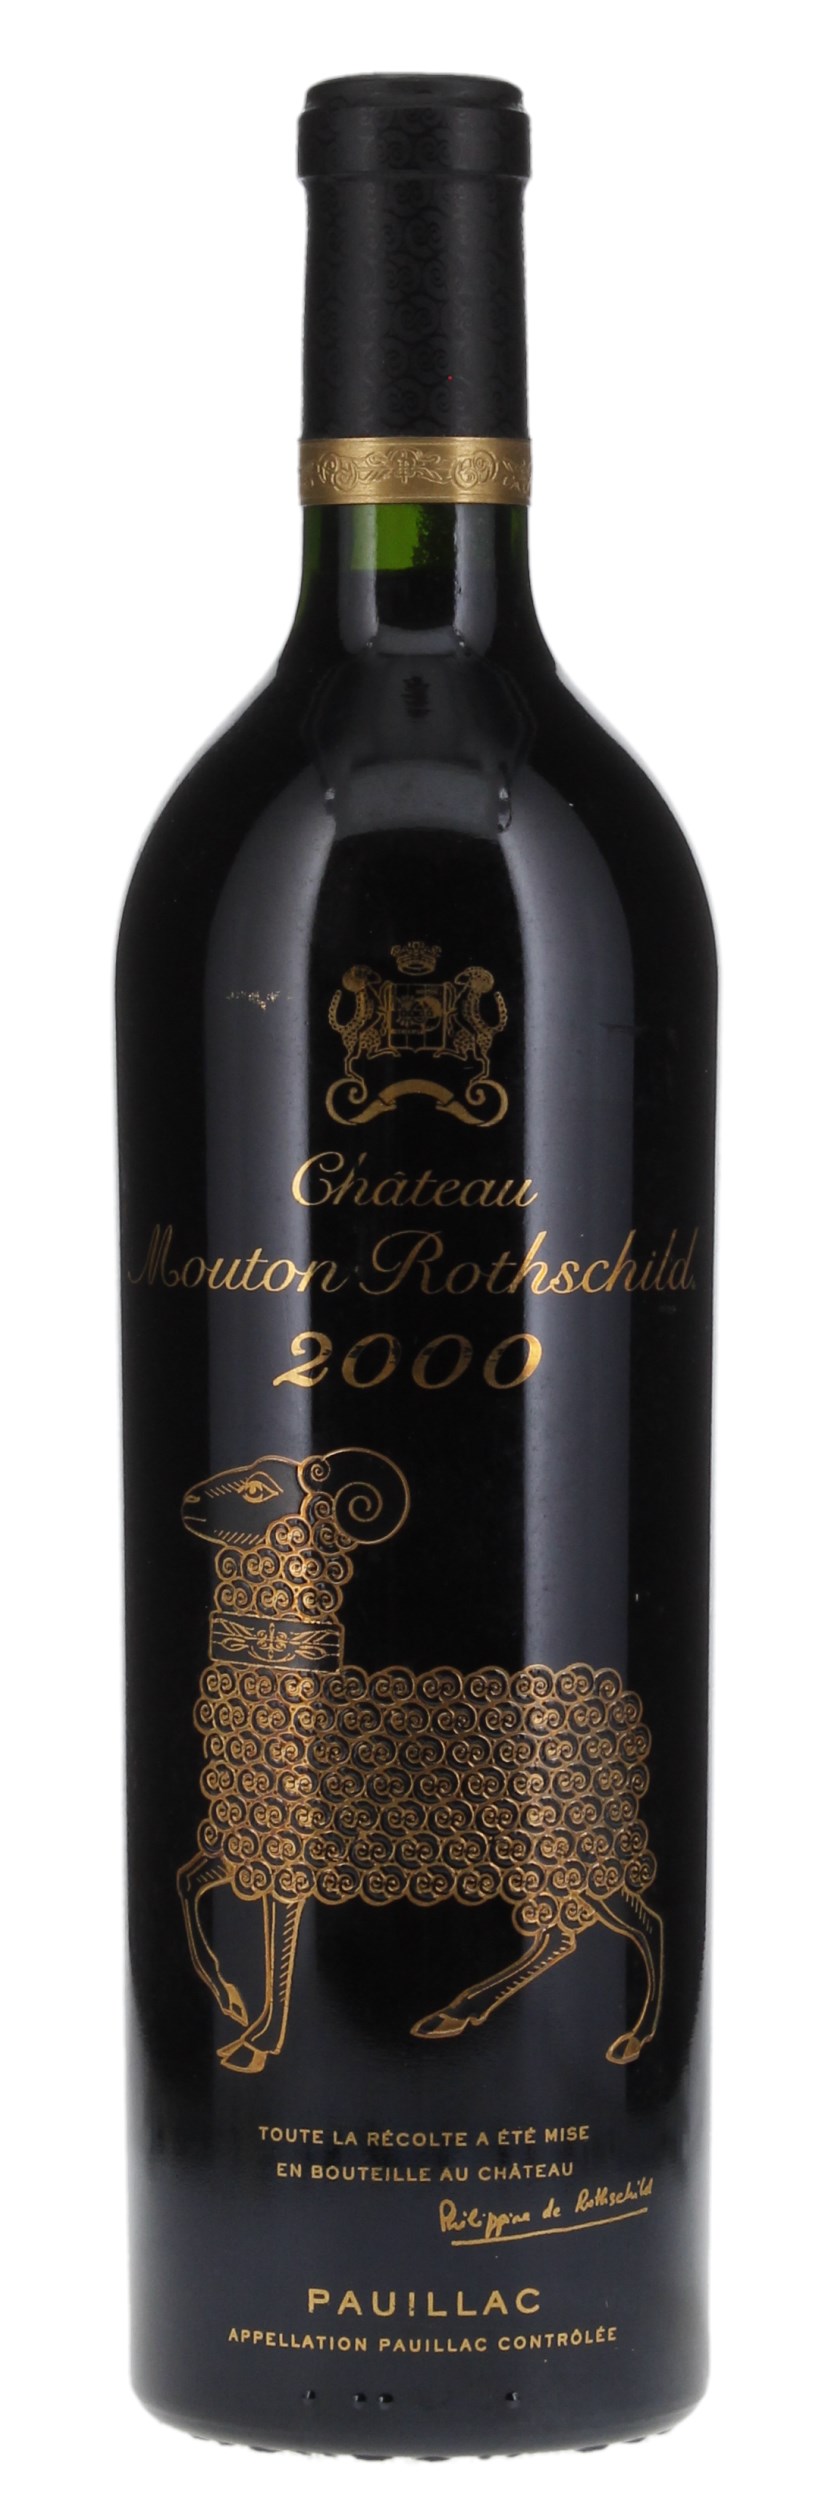 2000 Château Mouton Rothschild, 750ml